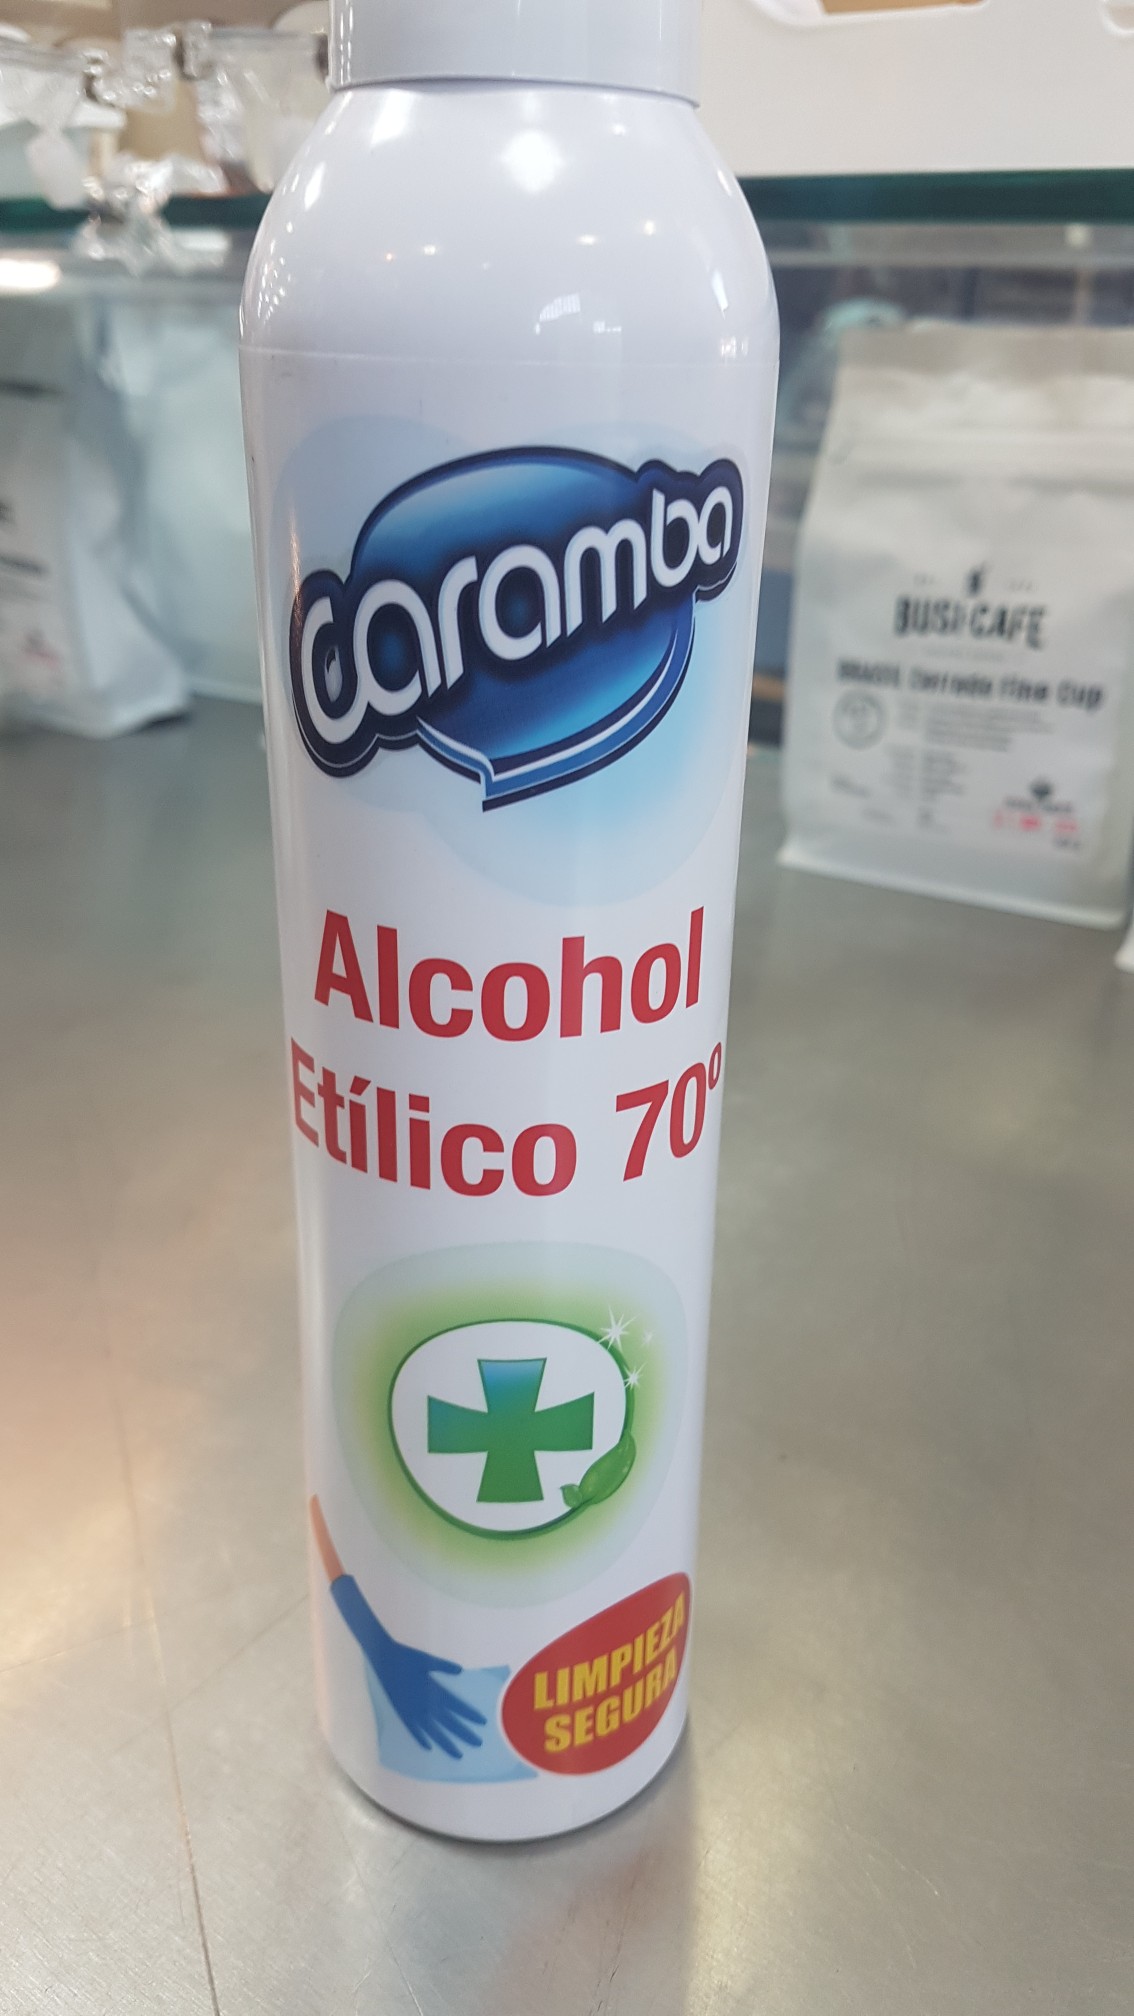 ALCOHOL ETILICO 70  300 ml CARAMBA